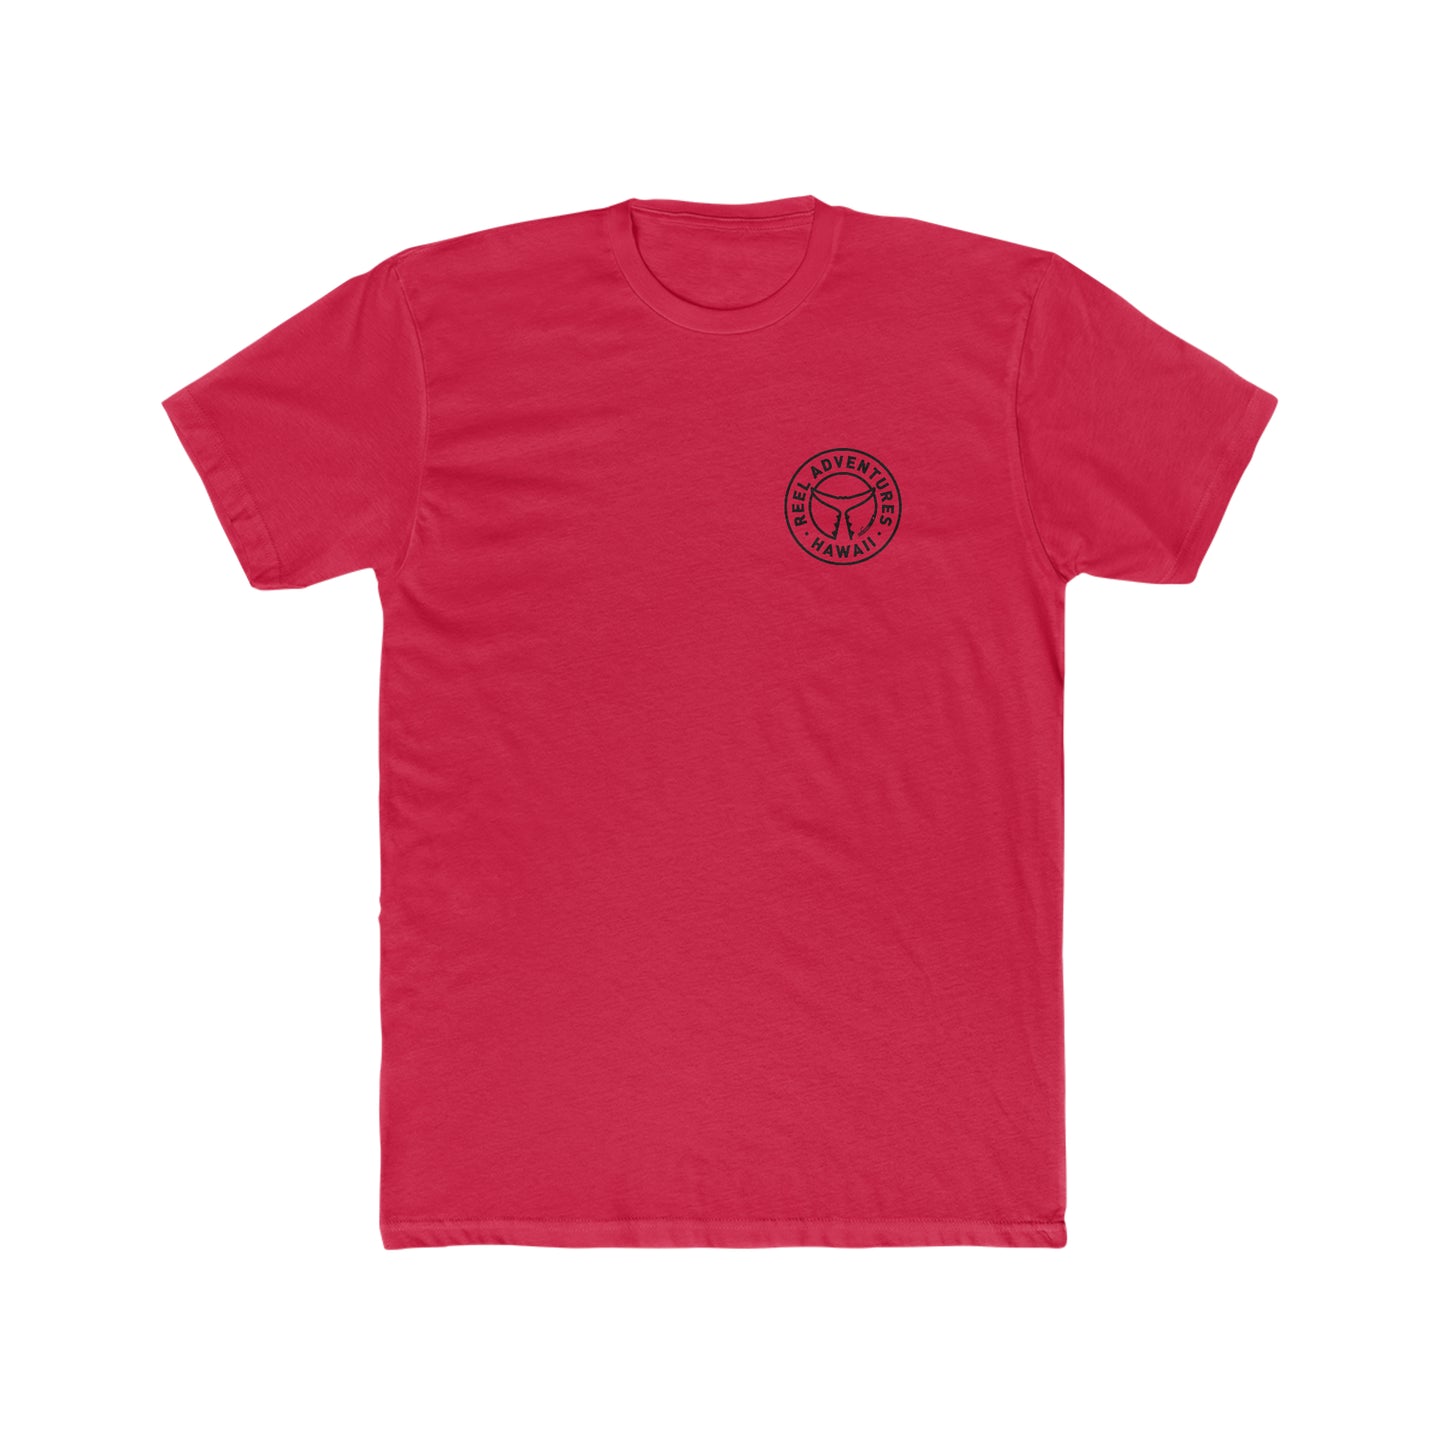 Reel Adventures Circle T-Shirt